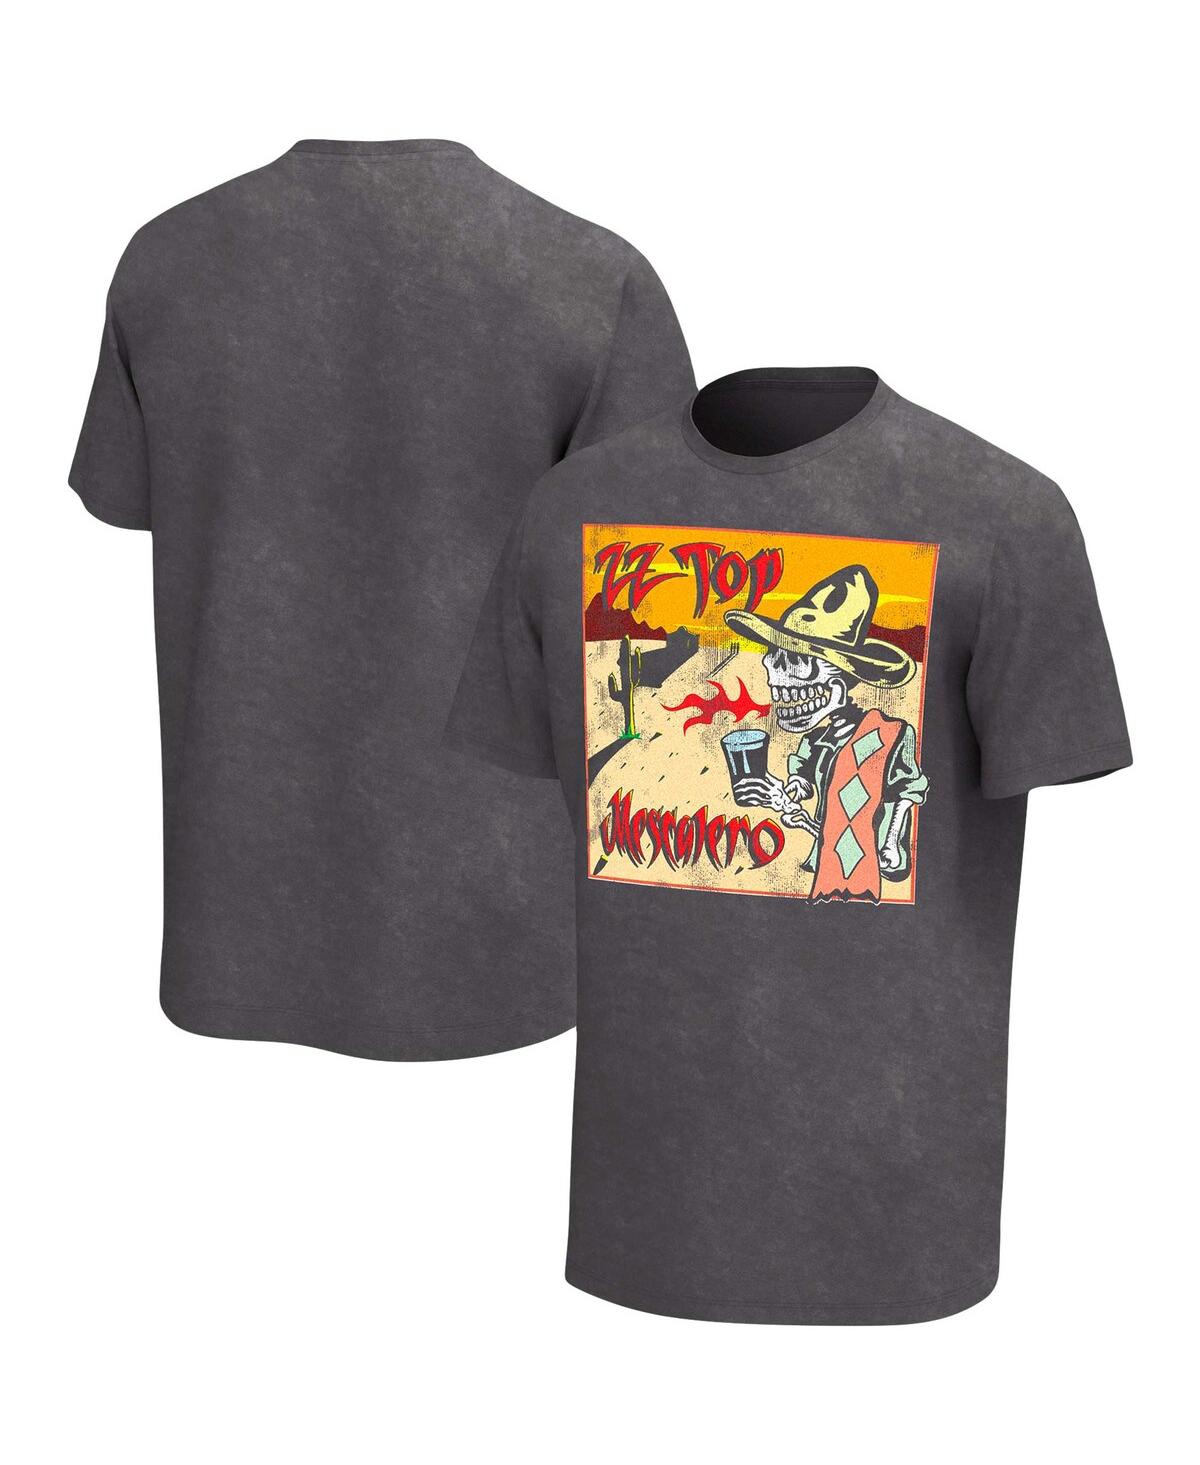 Shop Philcos Men's Charcoal Zz Top Mescalero Washed Graphic T-shirt